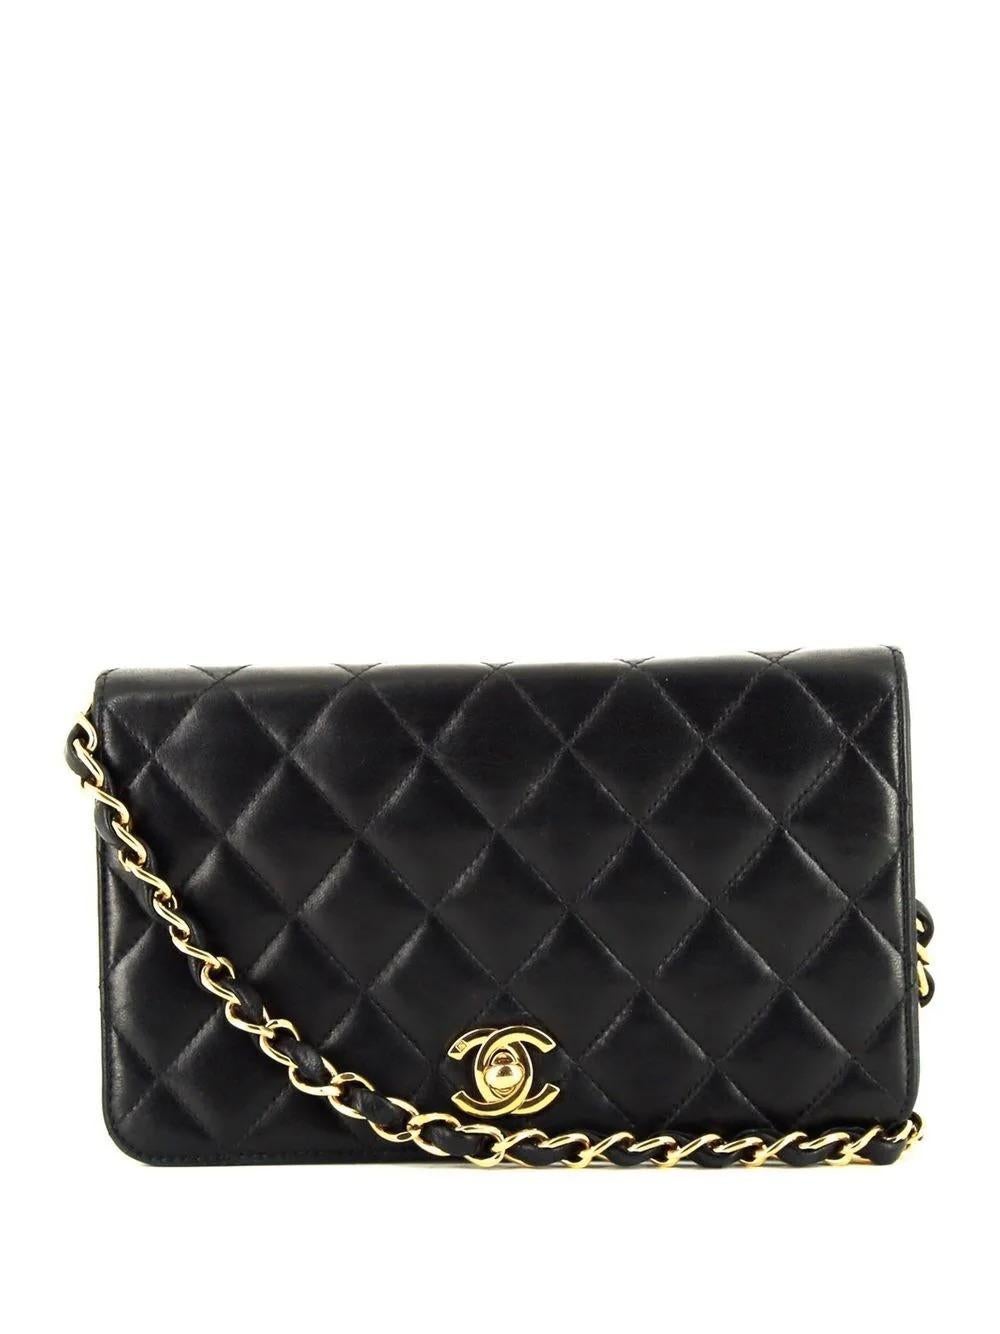 Chanel Black Mademoiselle Leather Bag For Sale 4